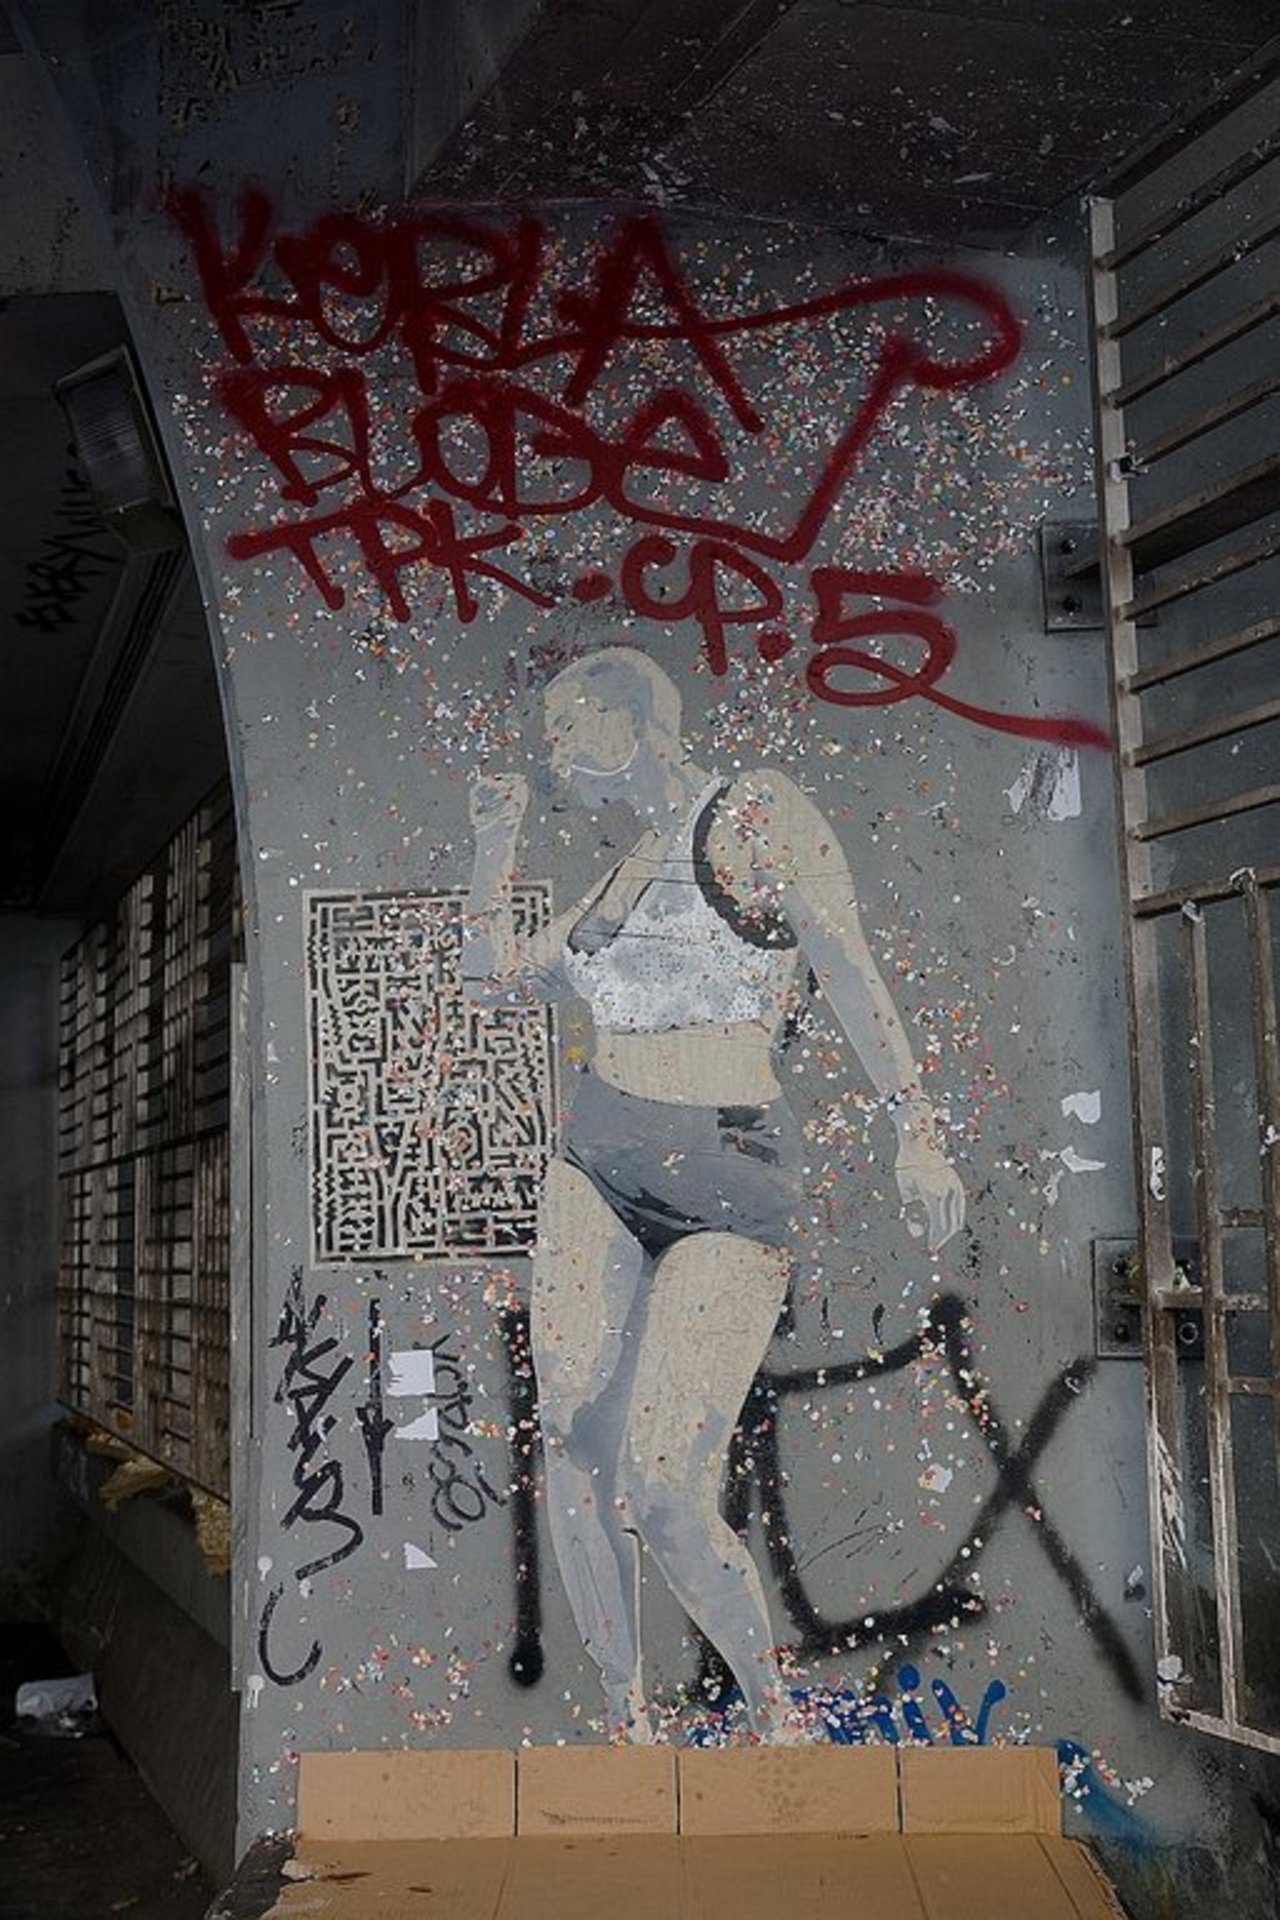 RT @urbacolors: Street Art by anonymous in #Paris http://www.urbacolors.com #art #mural #graffiti #streetart https://t.co/db86PQqv5B